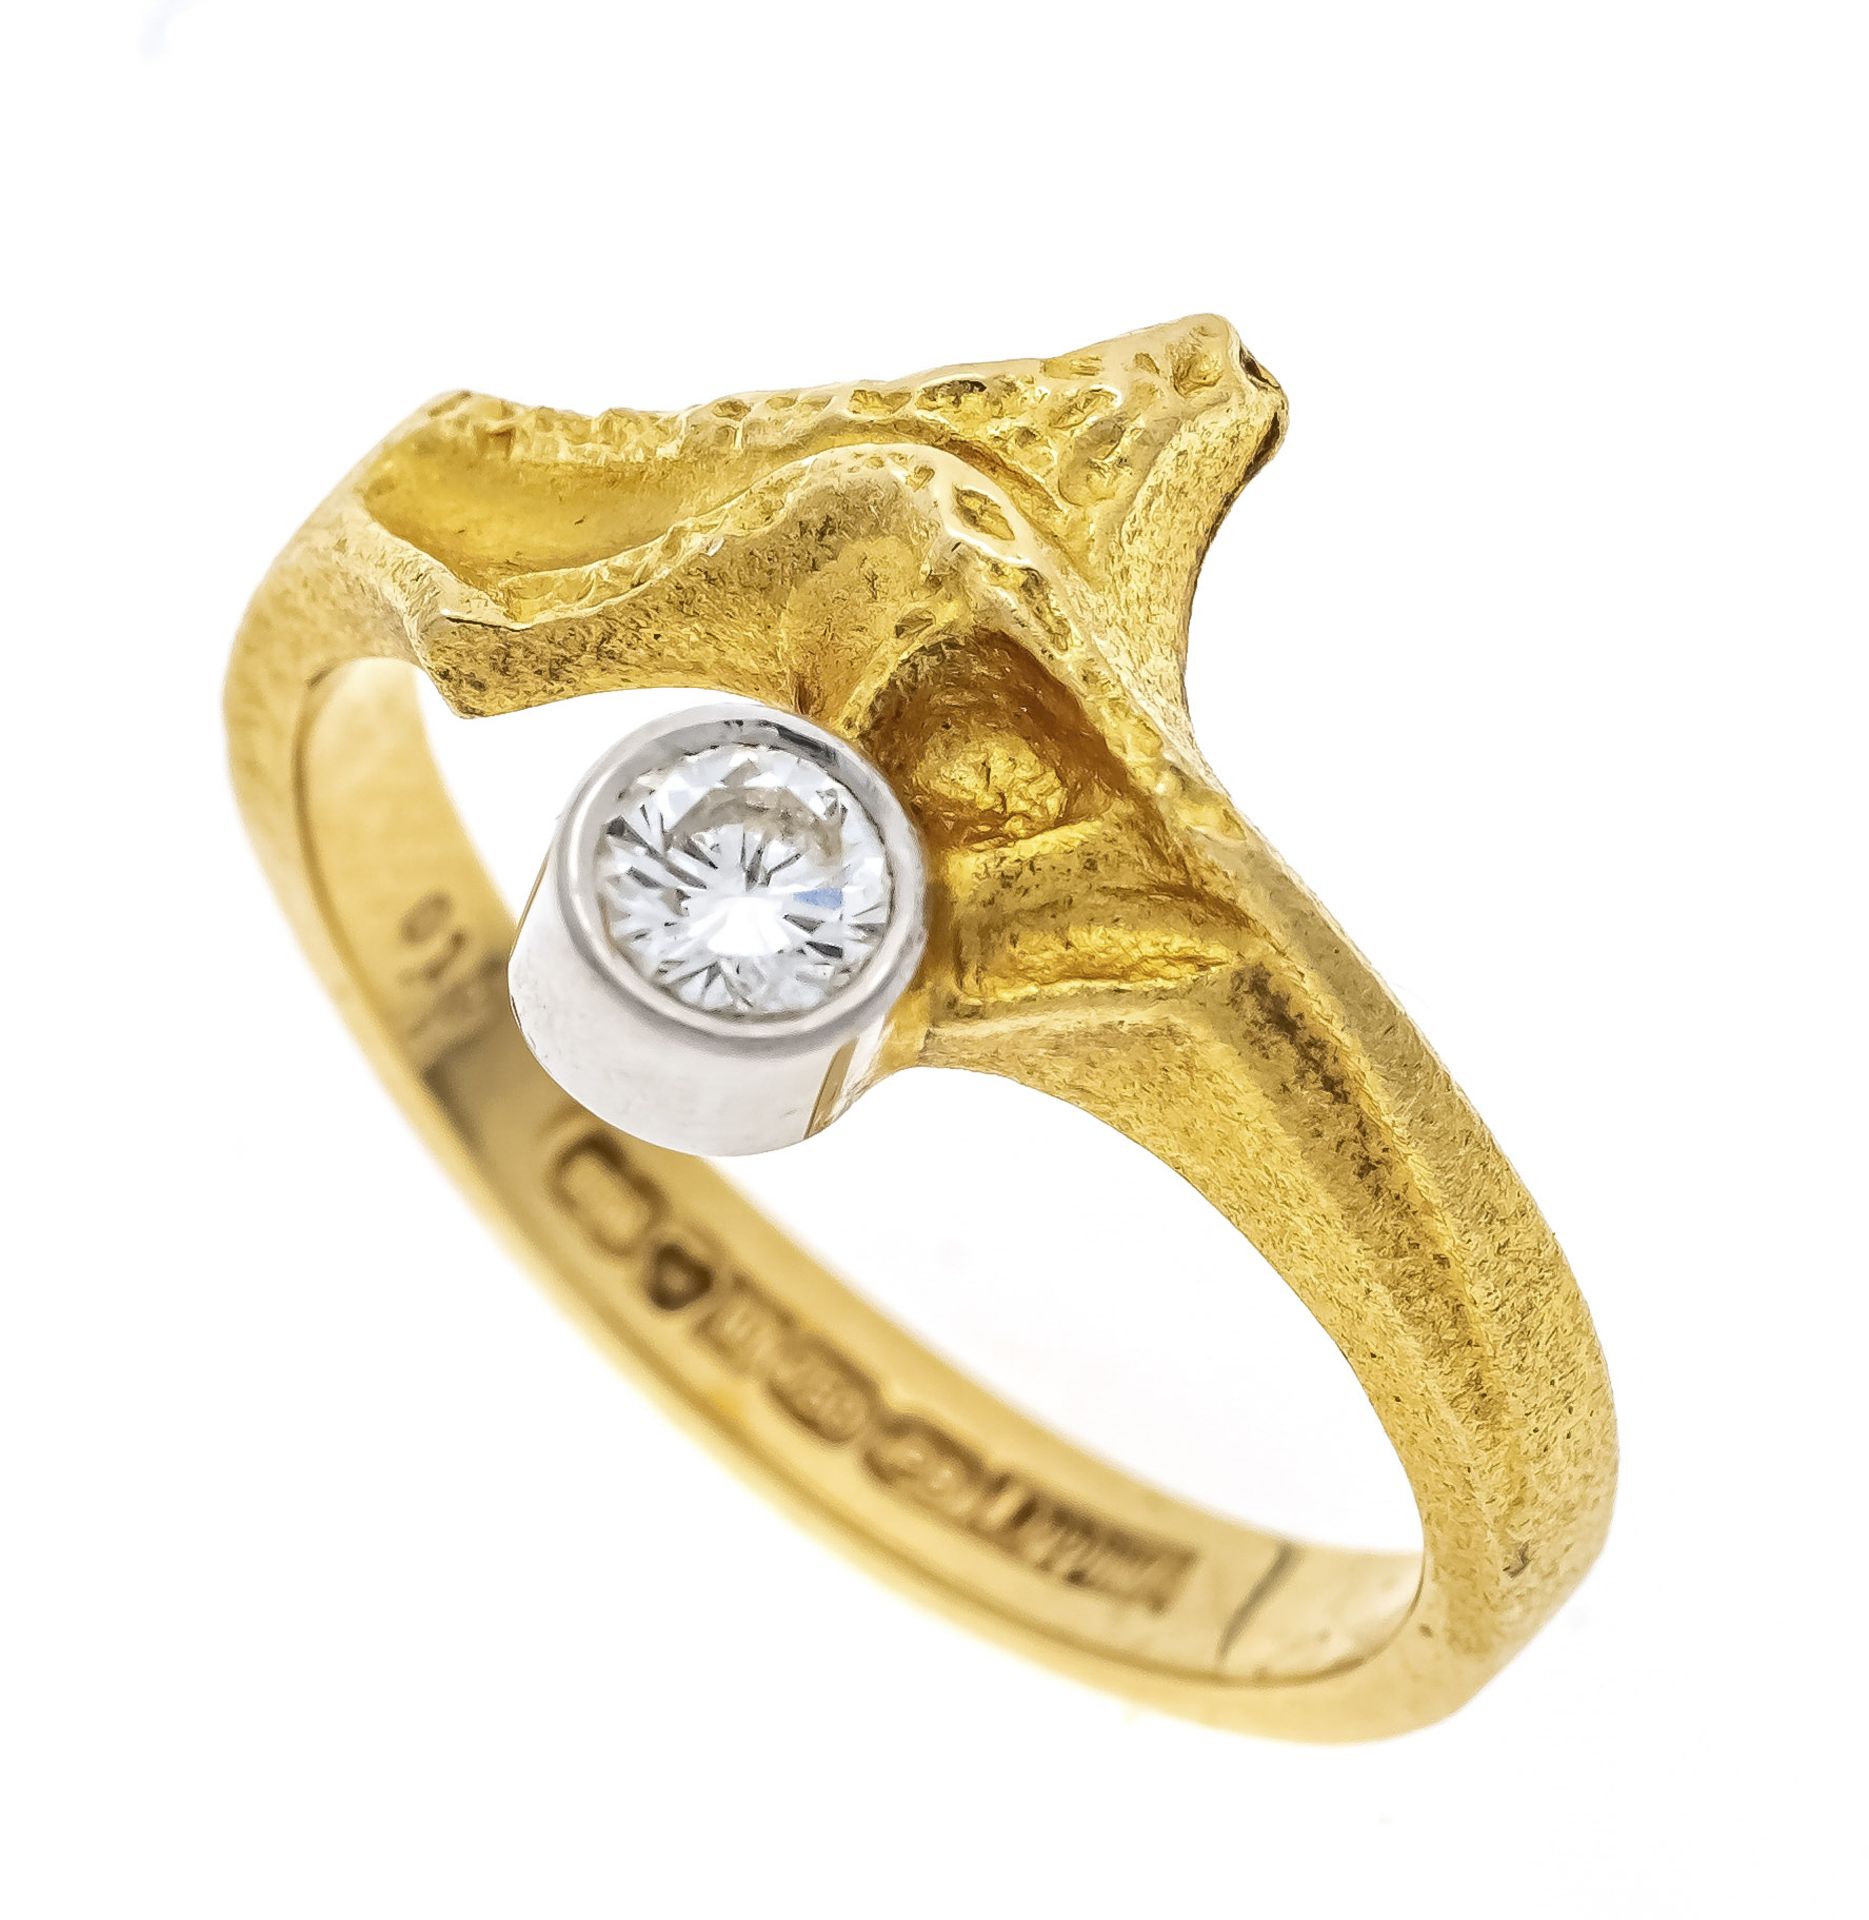 Lapponia diamond ring GG 750/000 with one diamond 0,19 ct hallmarked W/SI, RG 54, Lapponia marked,